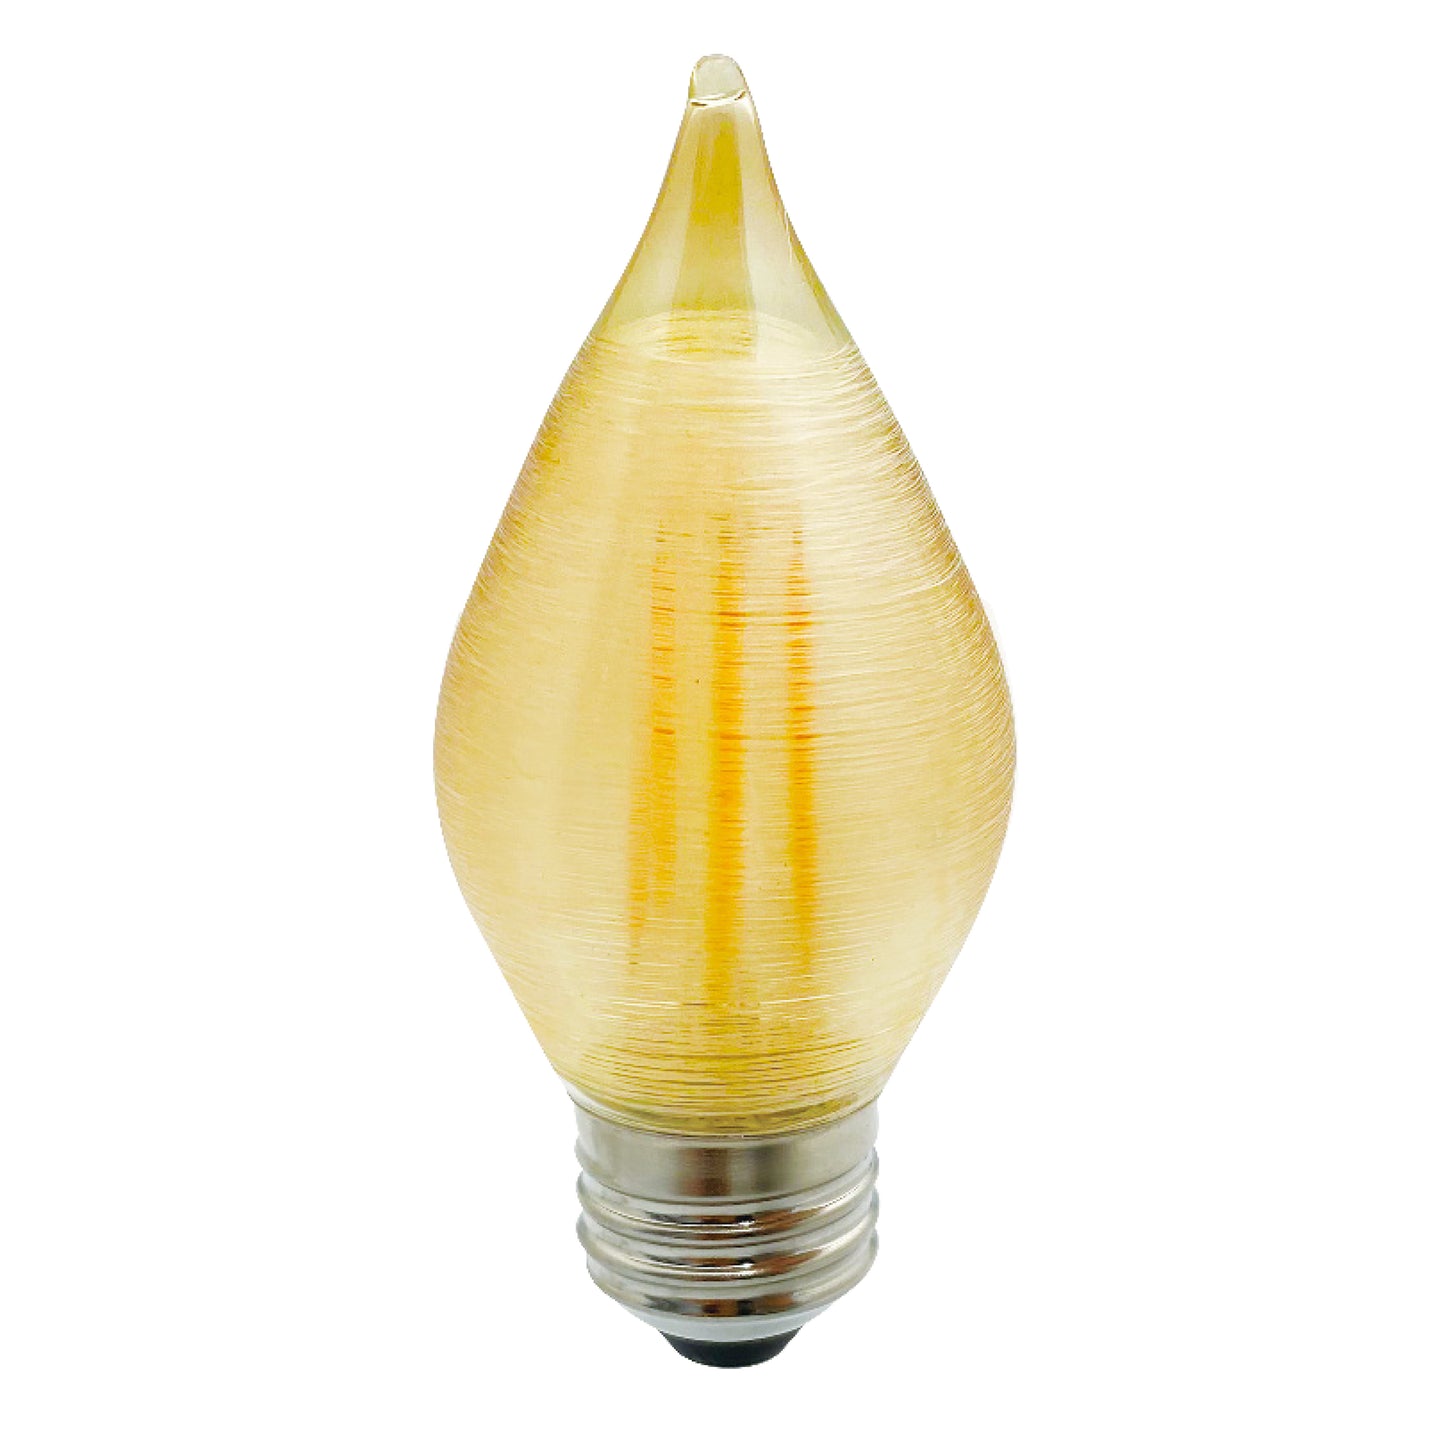 Bulbrite Spunlite 4 Watt Dimmable C15 LED Filament Light Bulb with Amber Glass Finish and Medium (E26) Base - 2100K (Amber Light), 250 Lumens